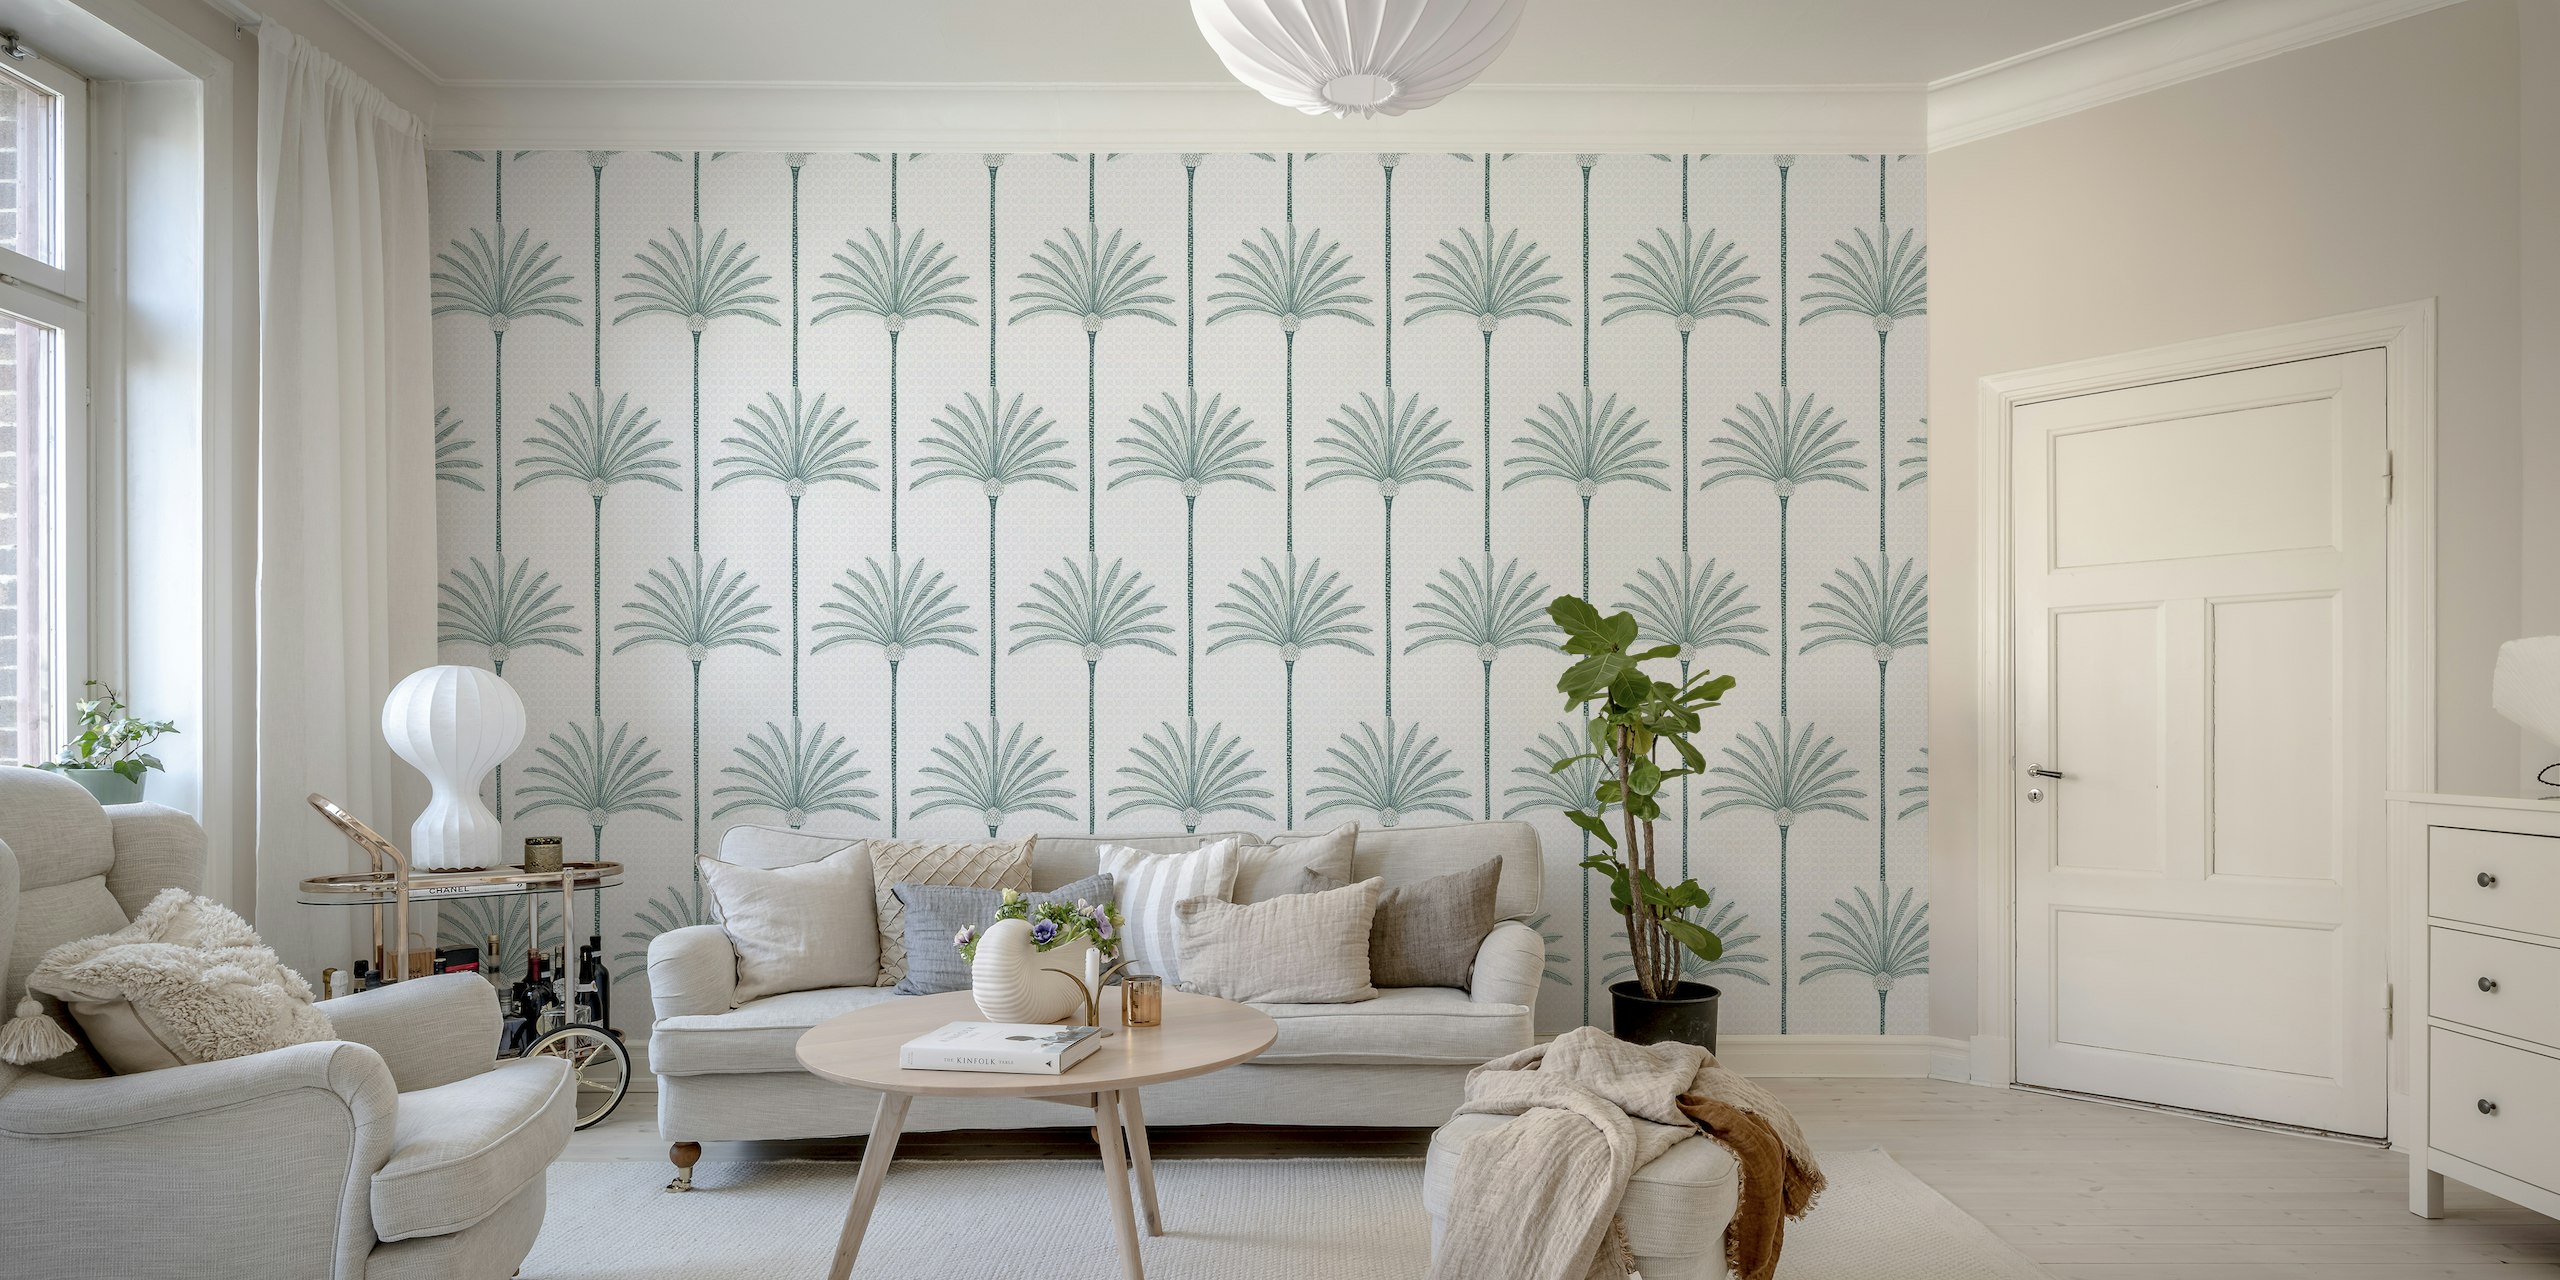 Palm Stripes - teal behang